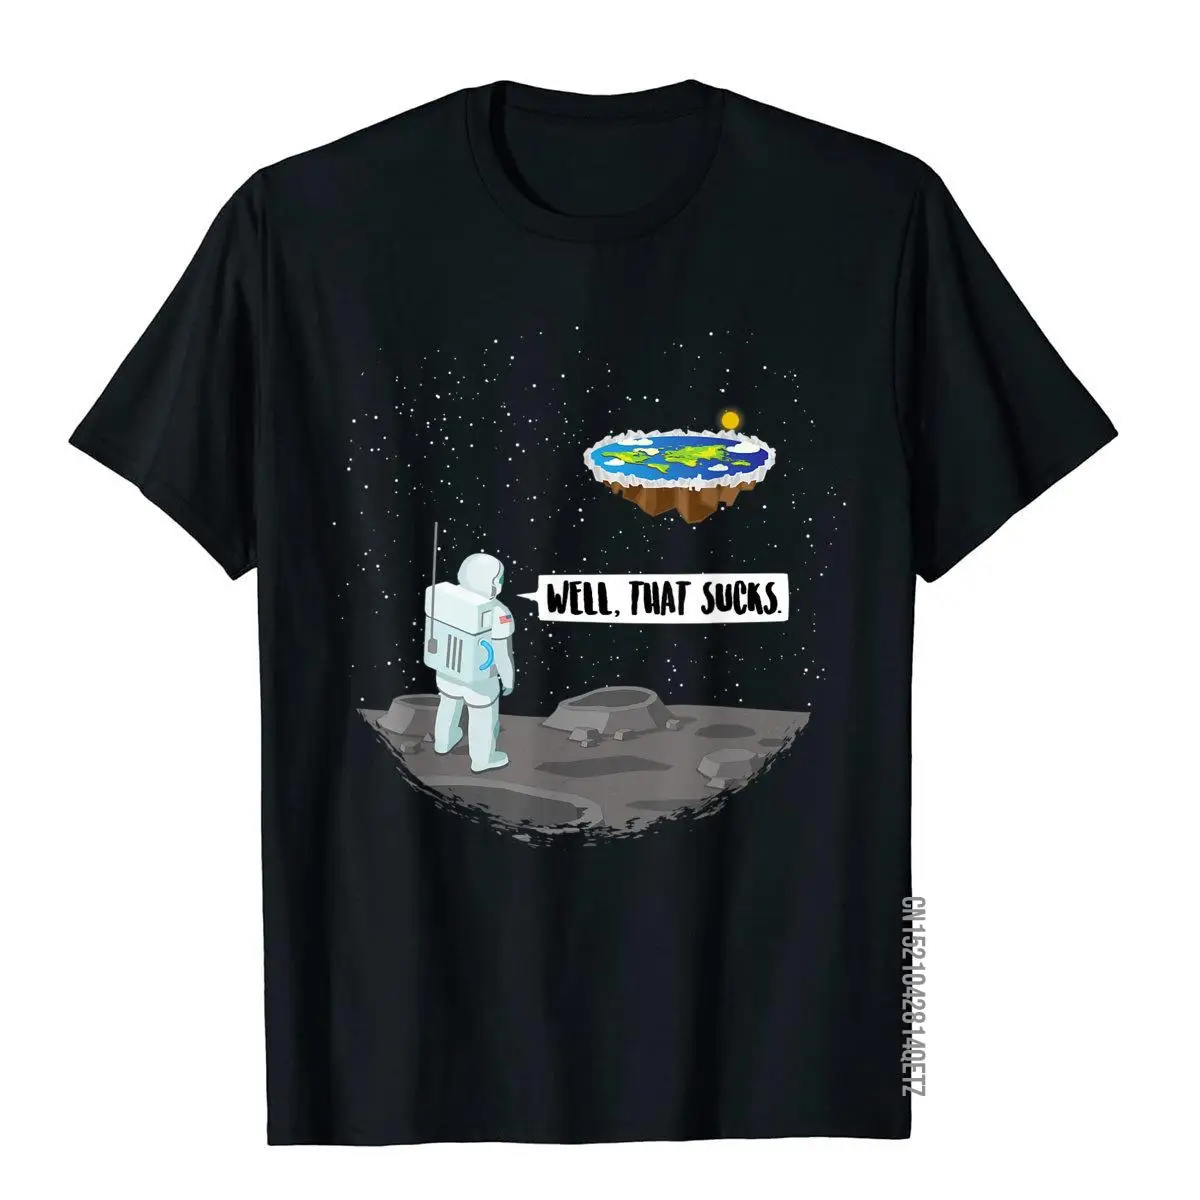 Забавные Мужские футболки в стиле ретро с изображением астронавта и земли